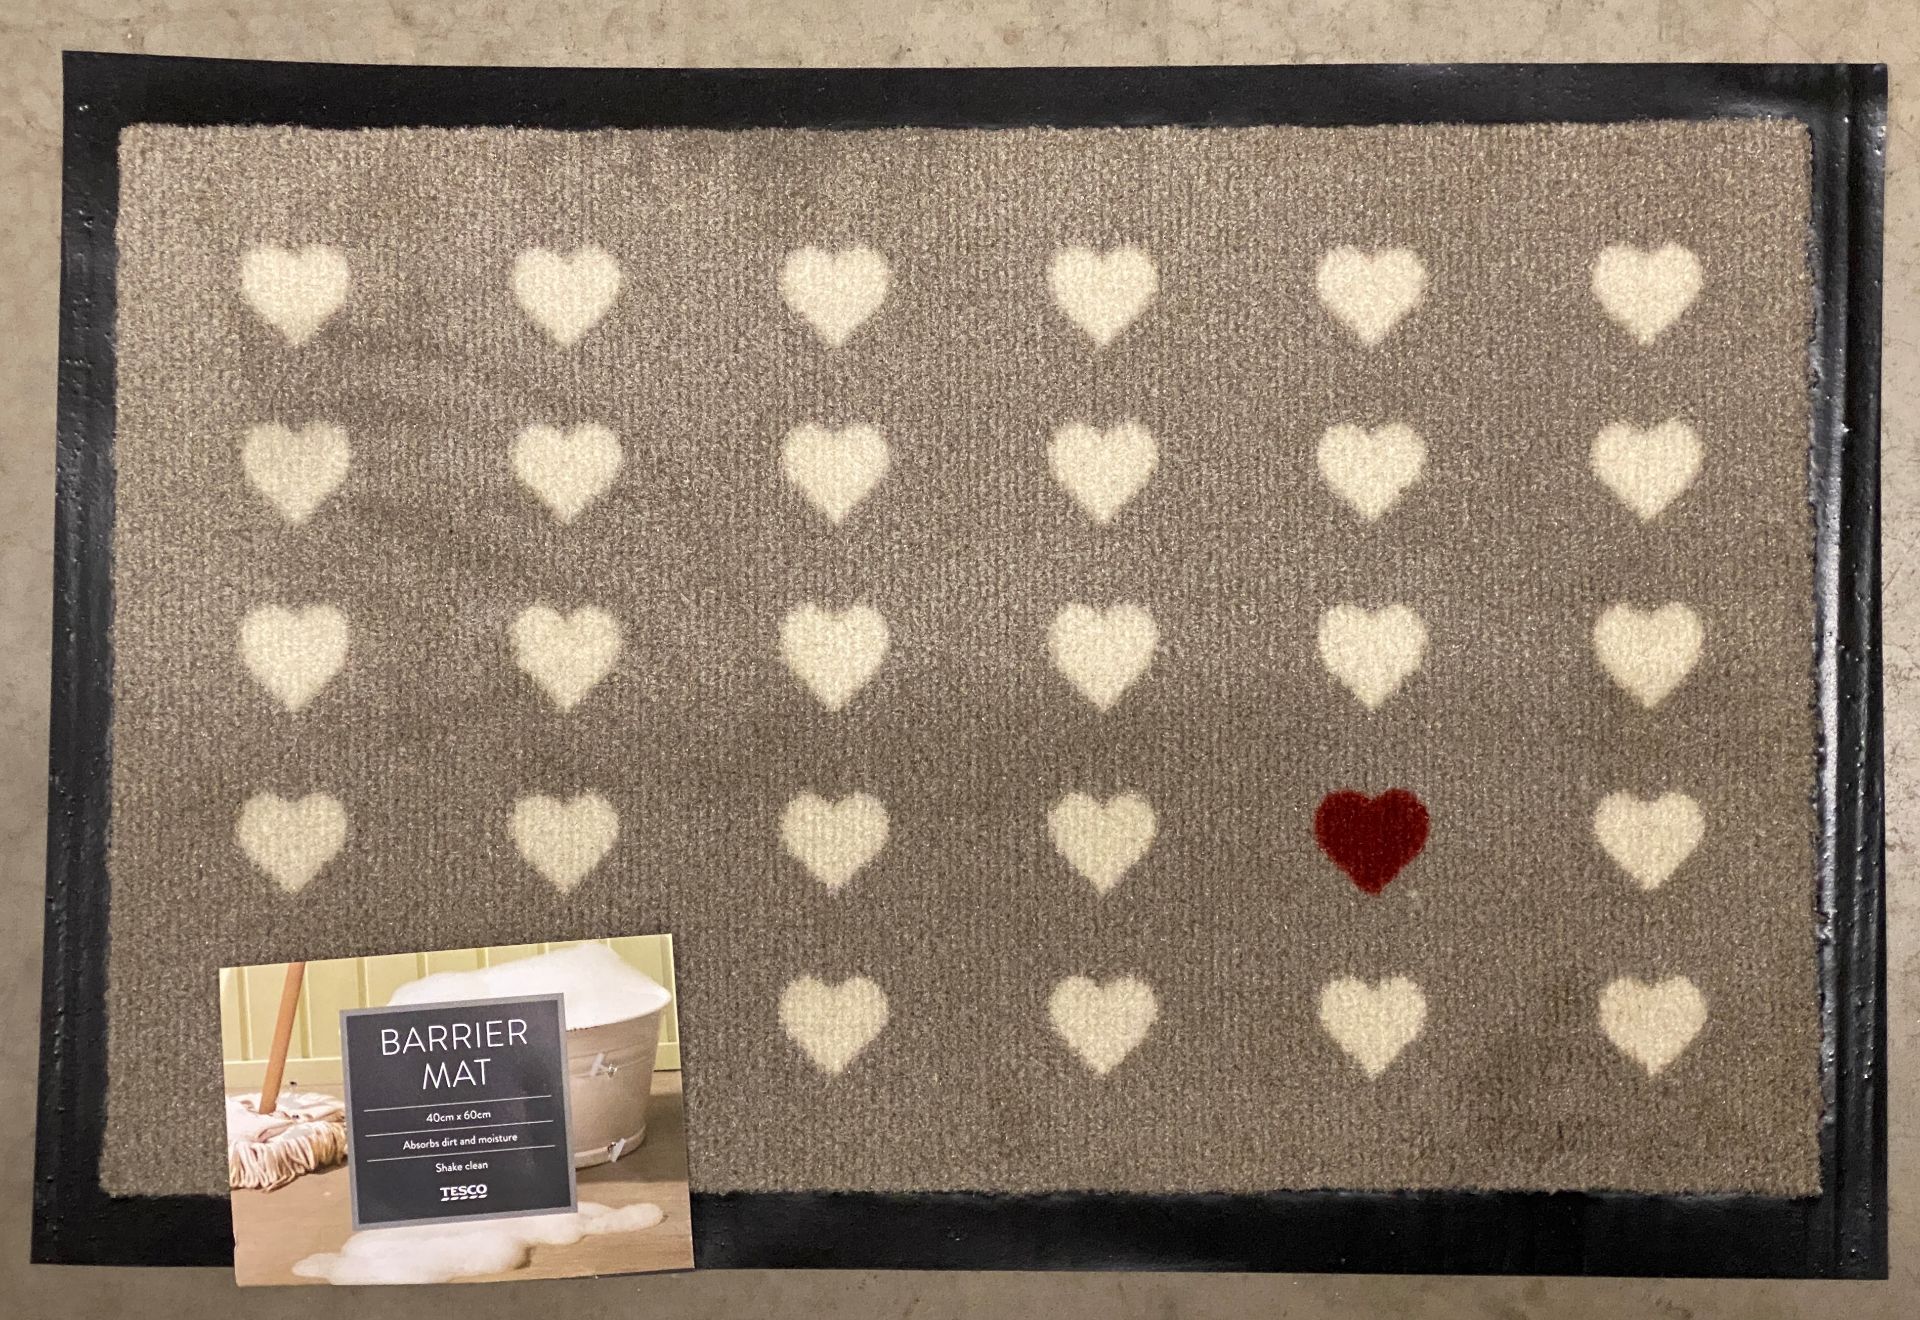 24 x Heart design Tesco barrier mats - 40cm x 60cm (2 x boxes of 12) *Please note the final